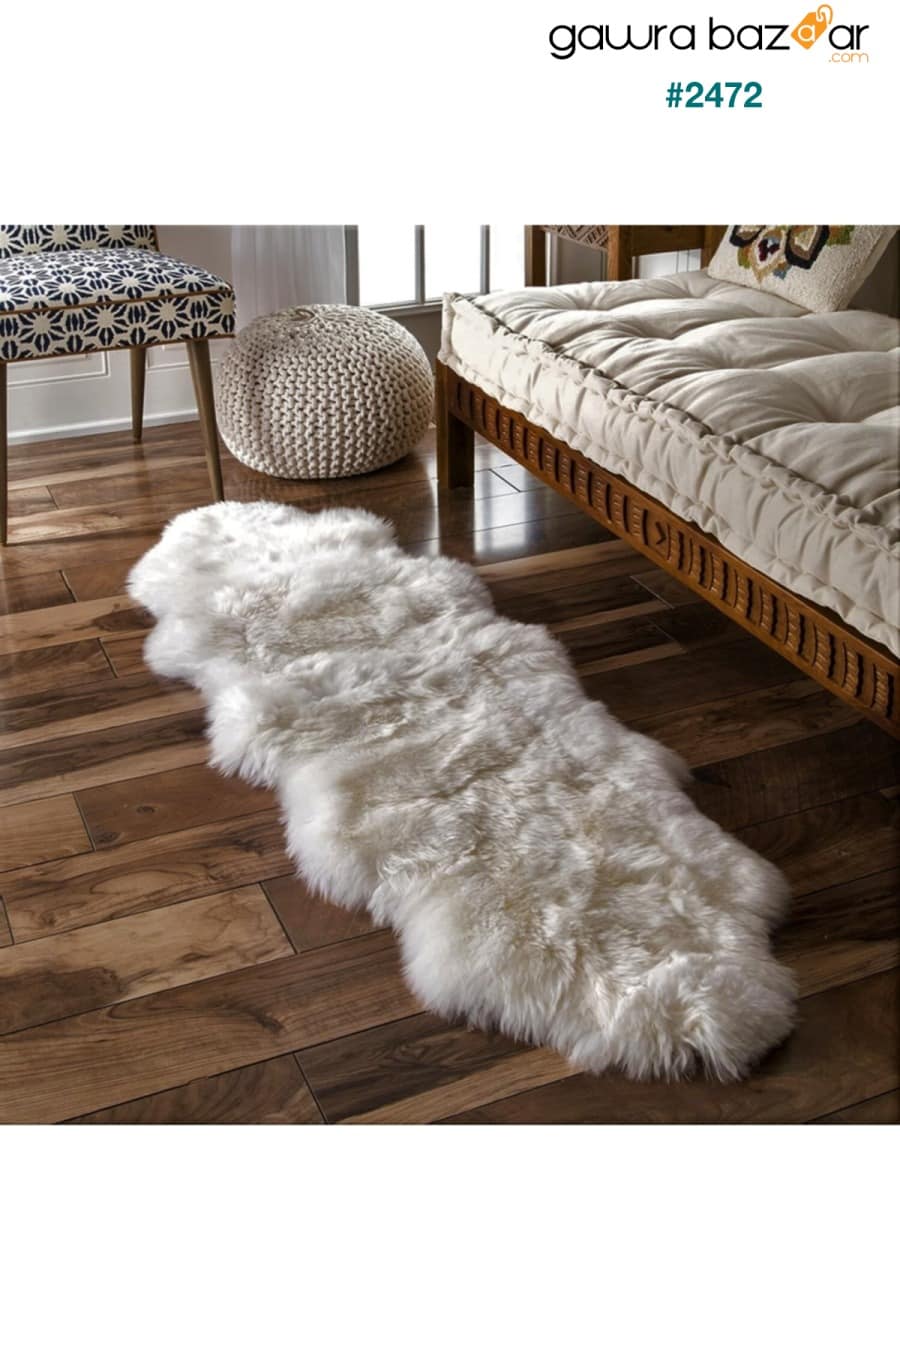 كريم برأس مزدوج من نوع Lamb Post Premium Plush Carpet الناعم ذو الوبر الطويل Napoli Home 4